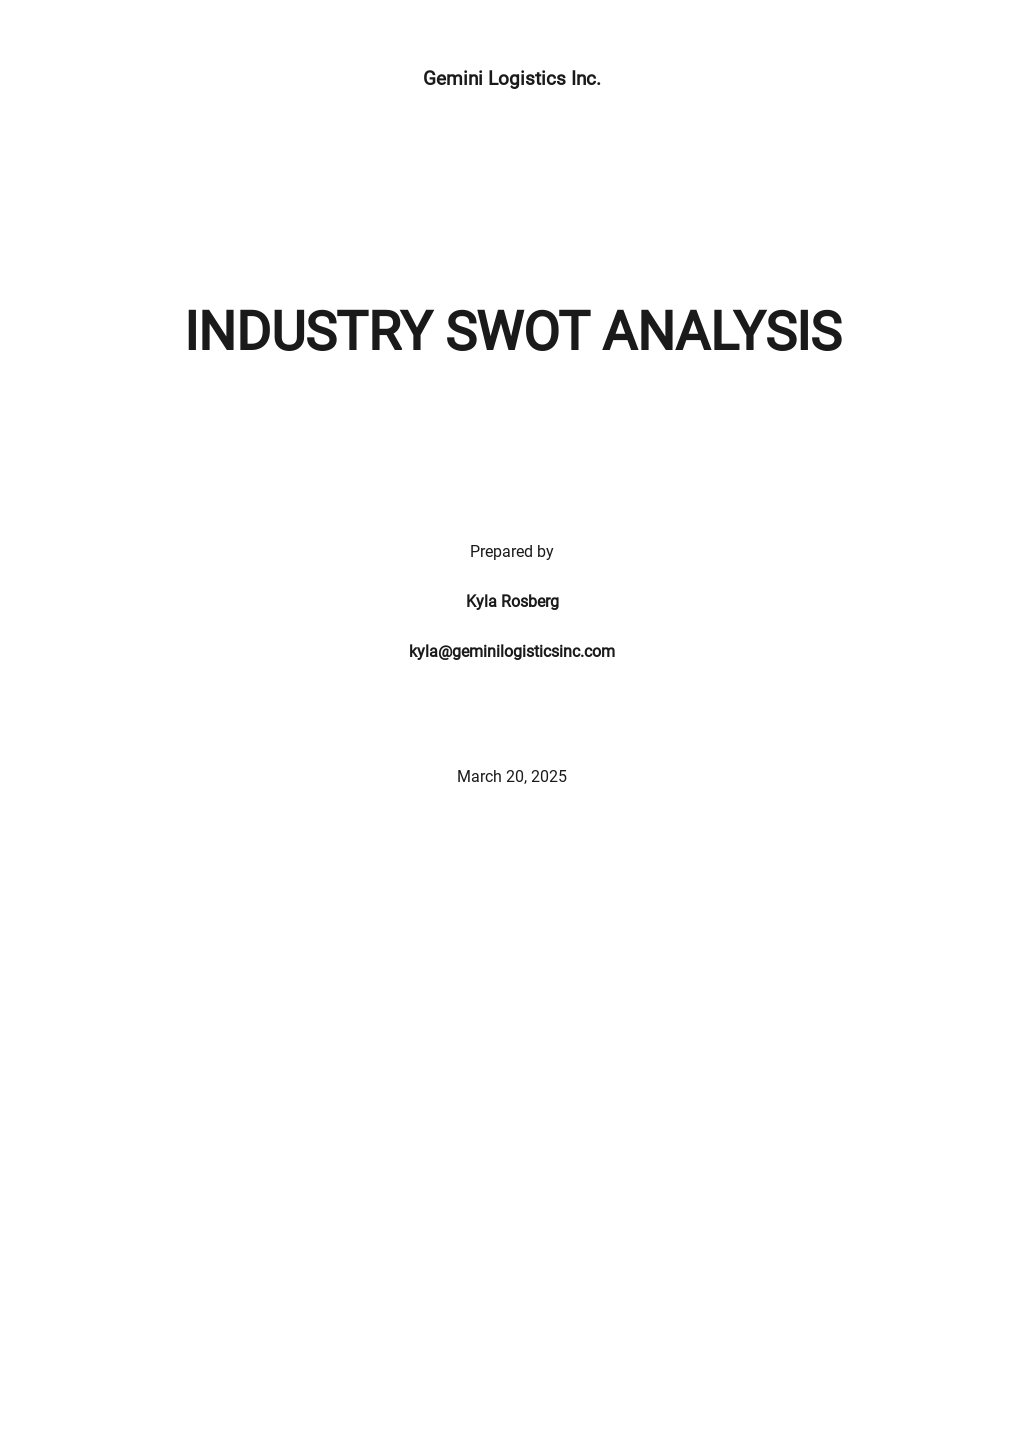 Industry SWOT Analysis Template.jpe